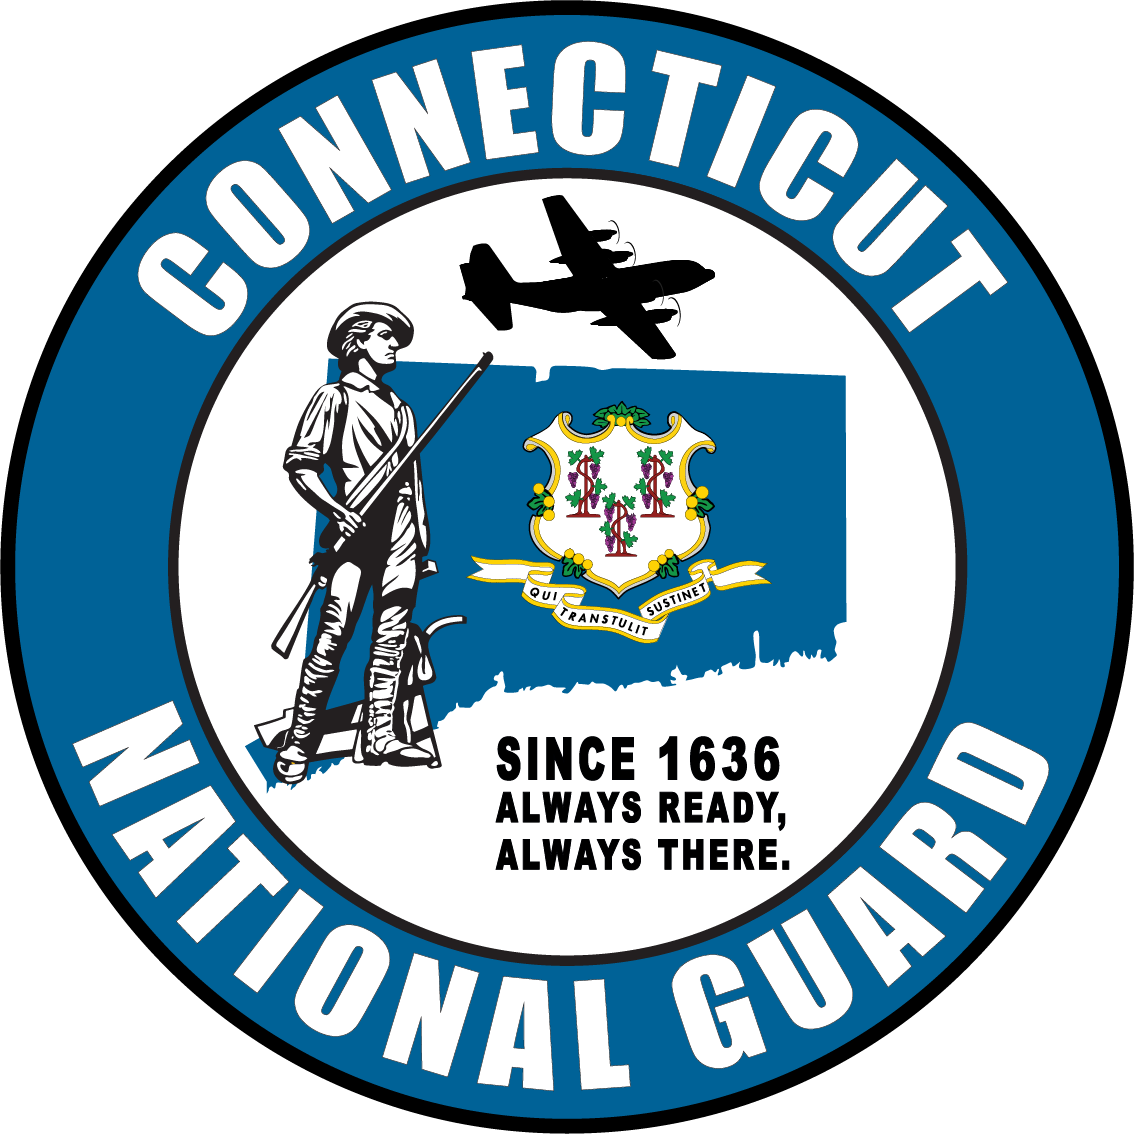 Connecticut National Guard